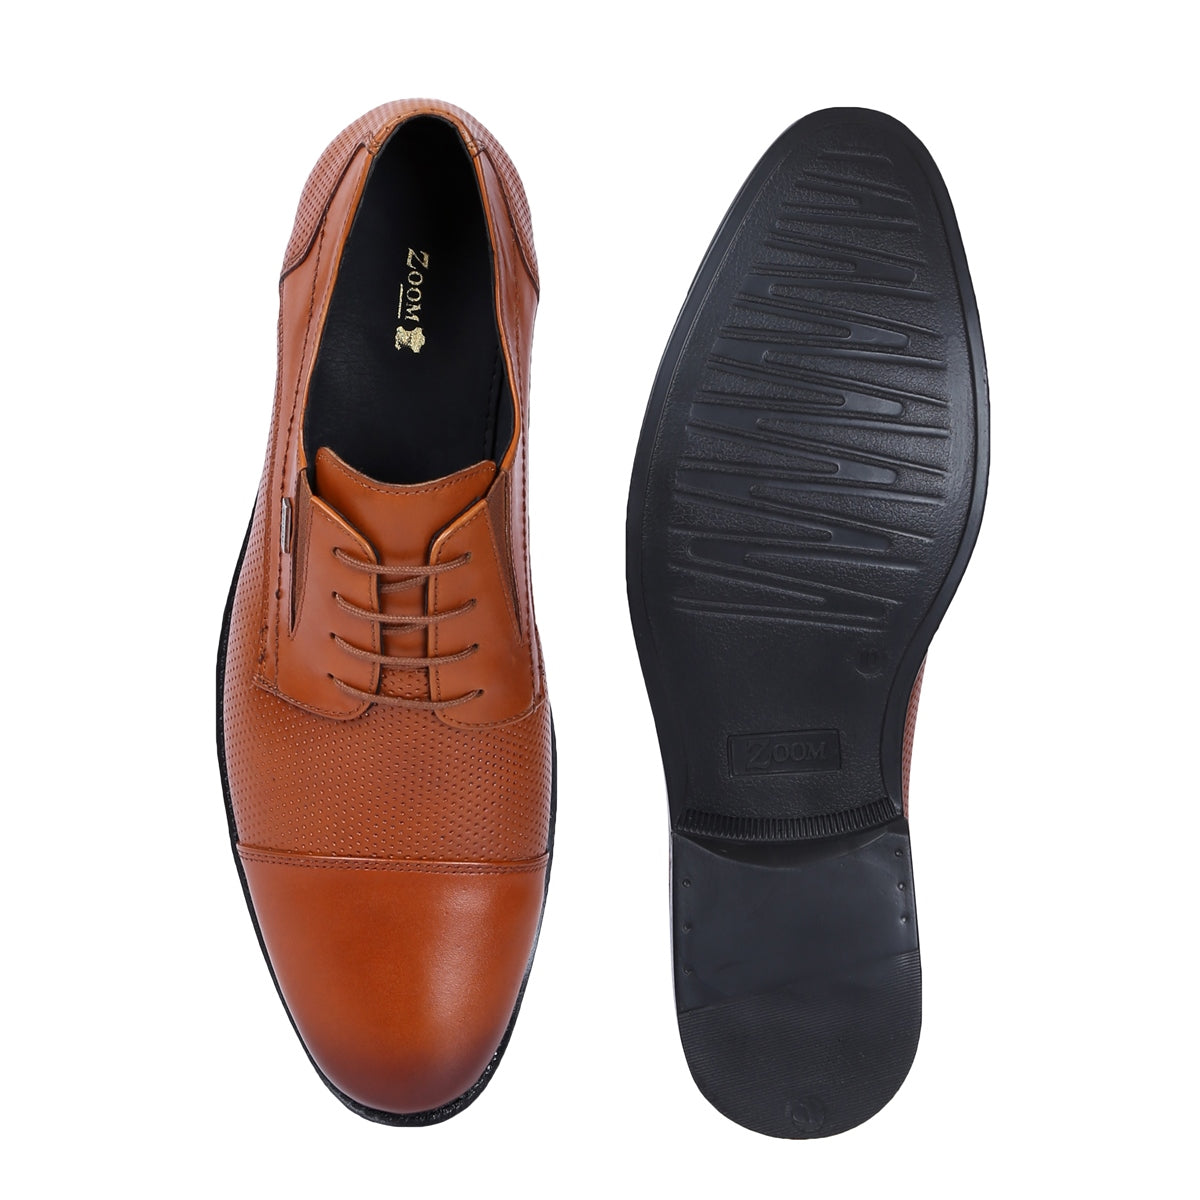 Formal Shoes for Men PC-75_tan4